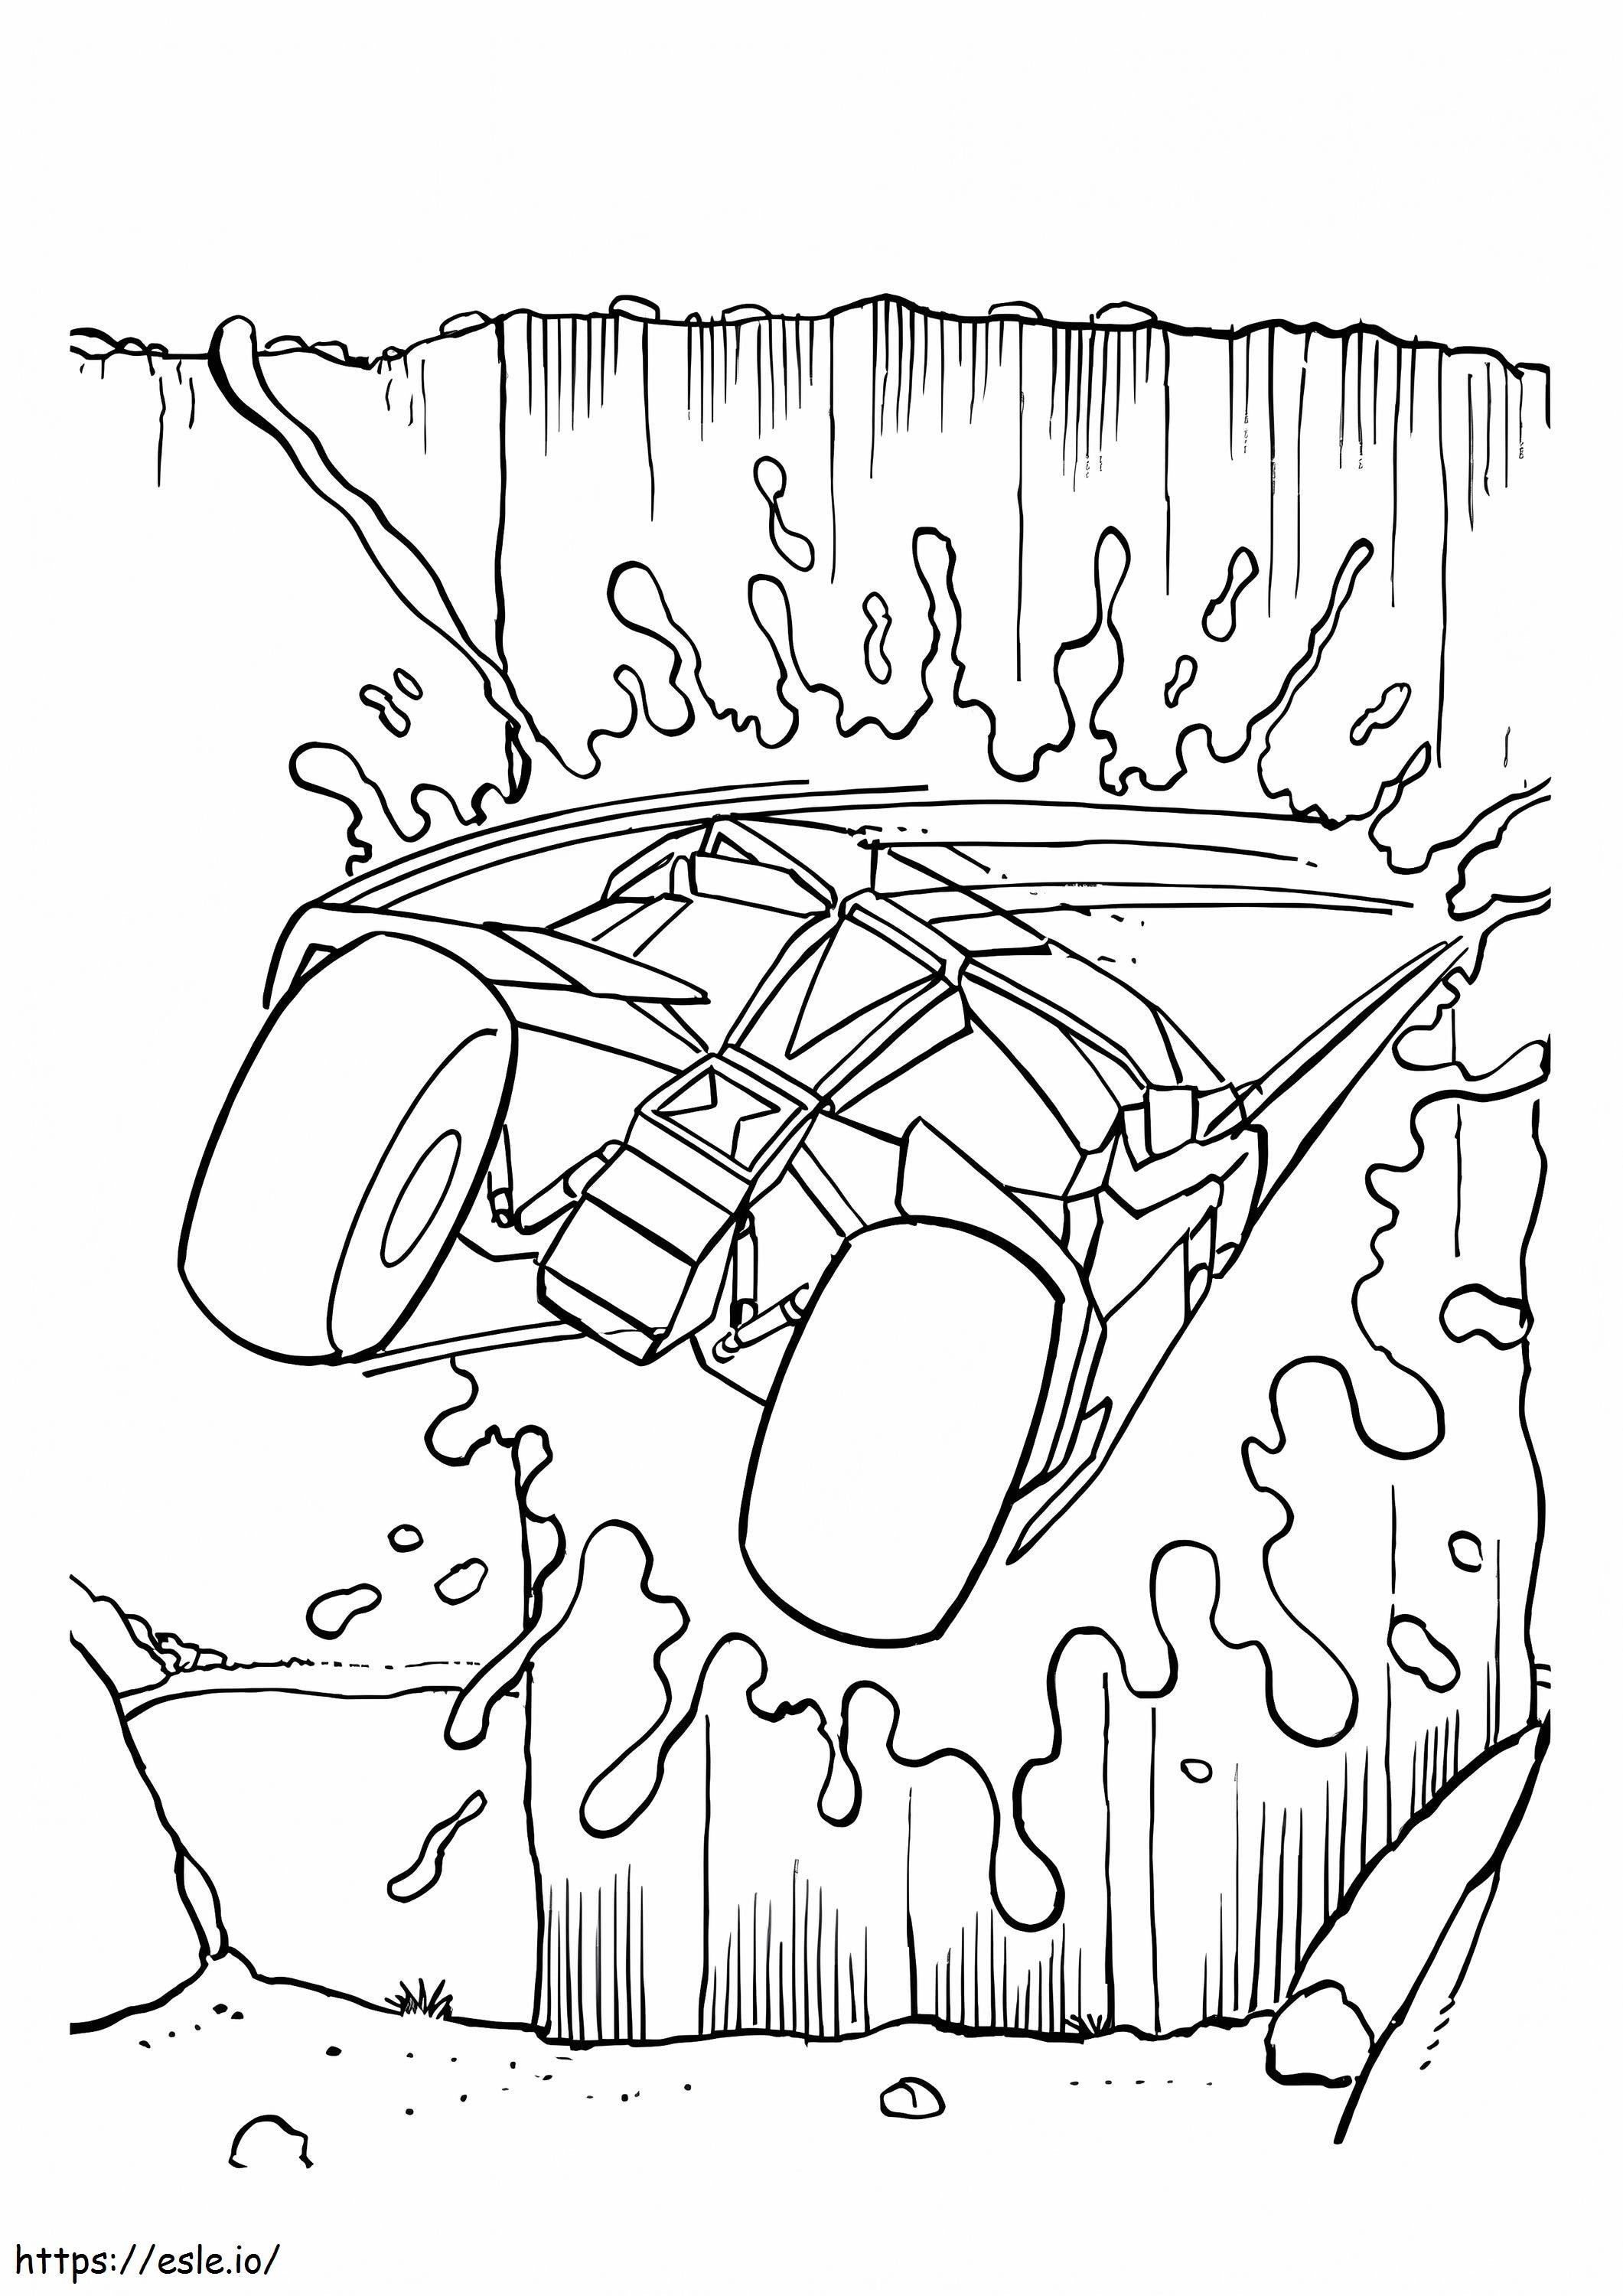 Batmobile 2 coloring page